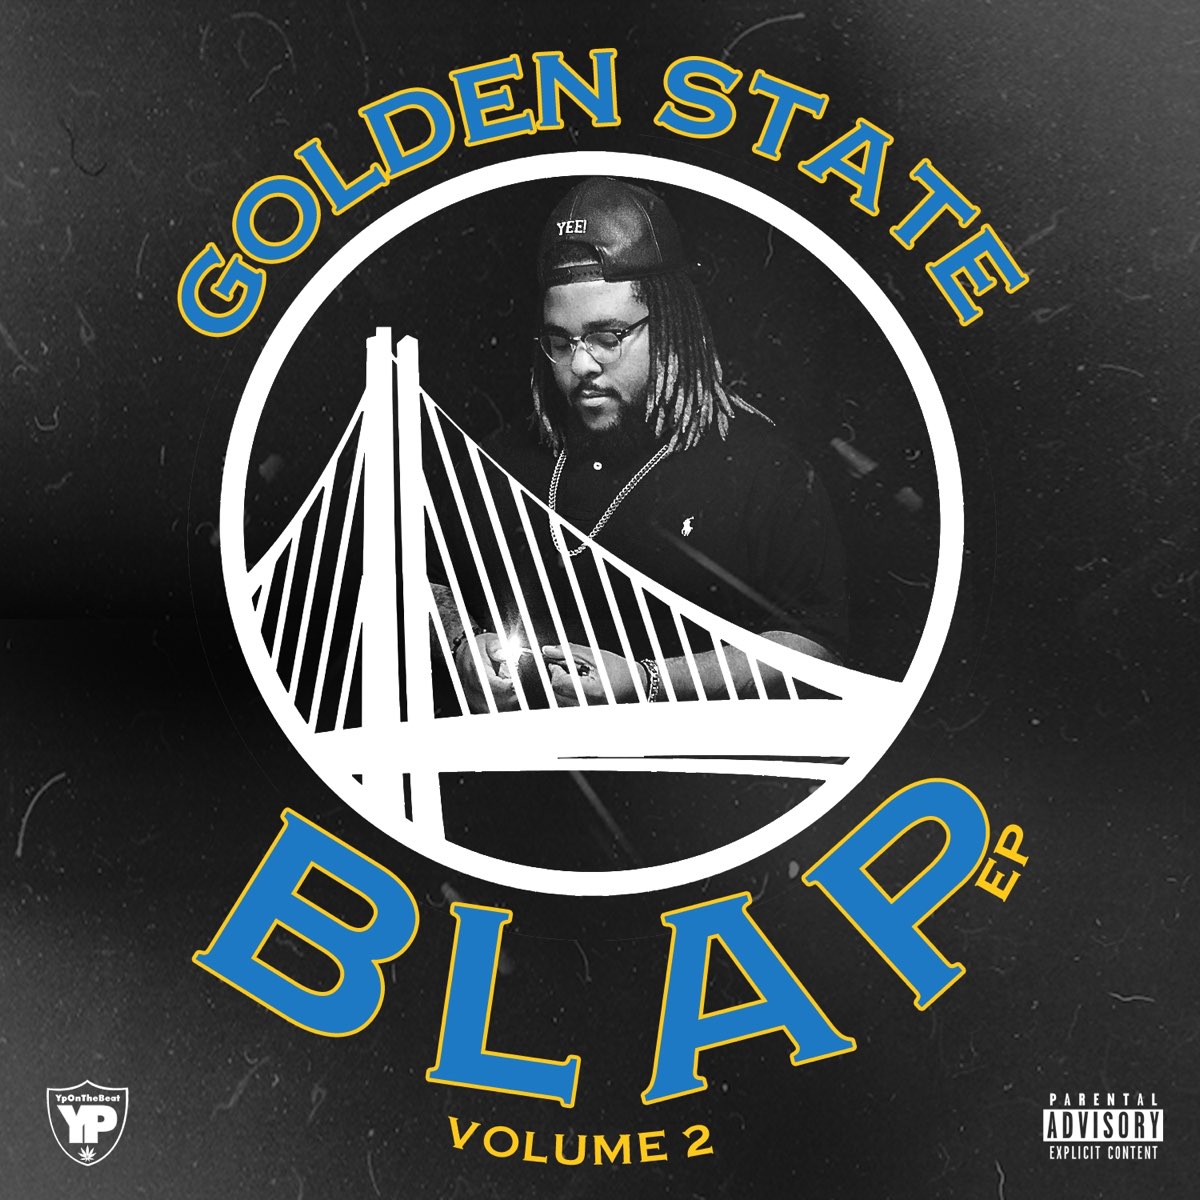 YPOnTheBeat - Golden State Blap Vol. 2 - EP